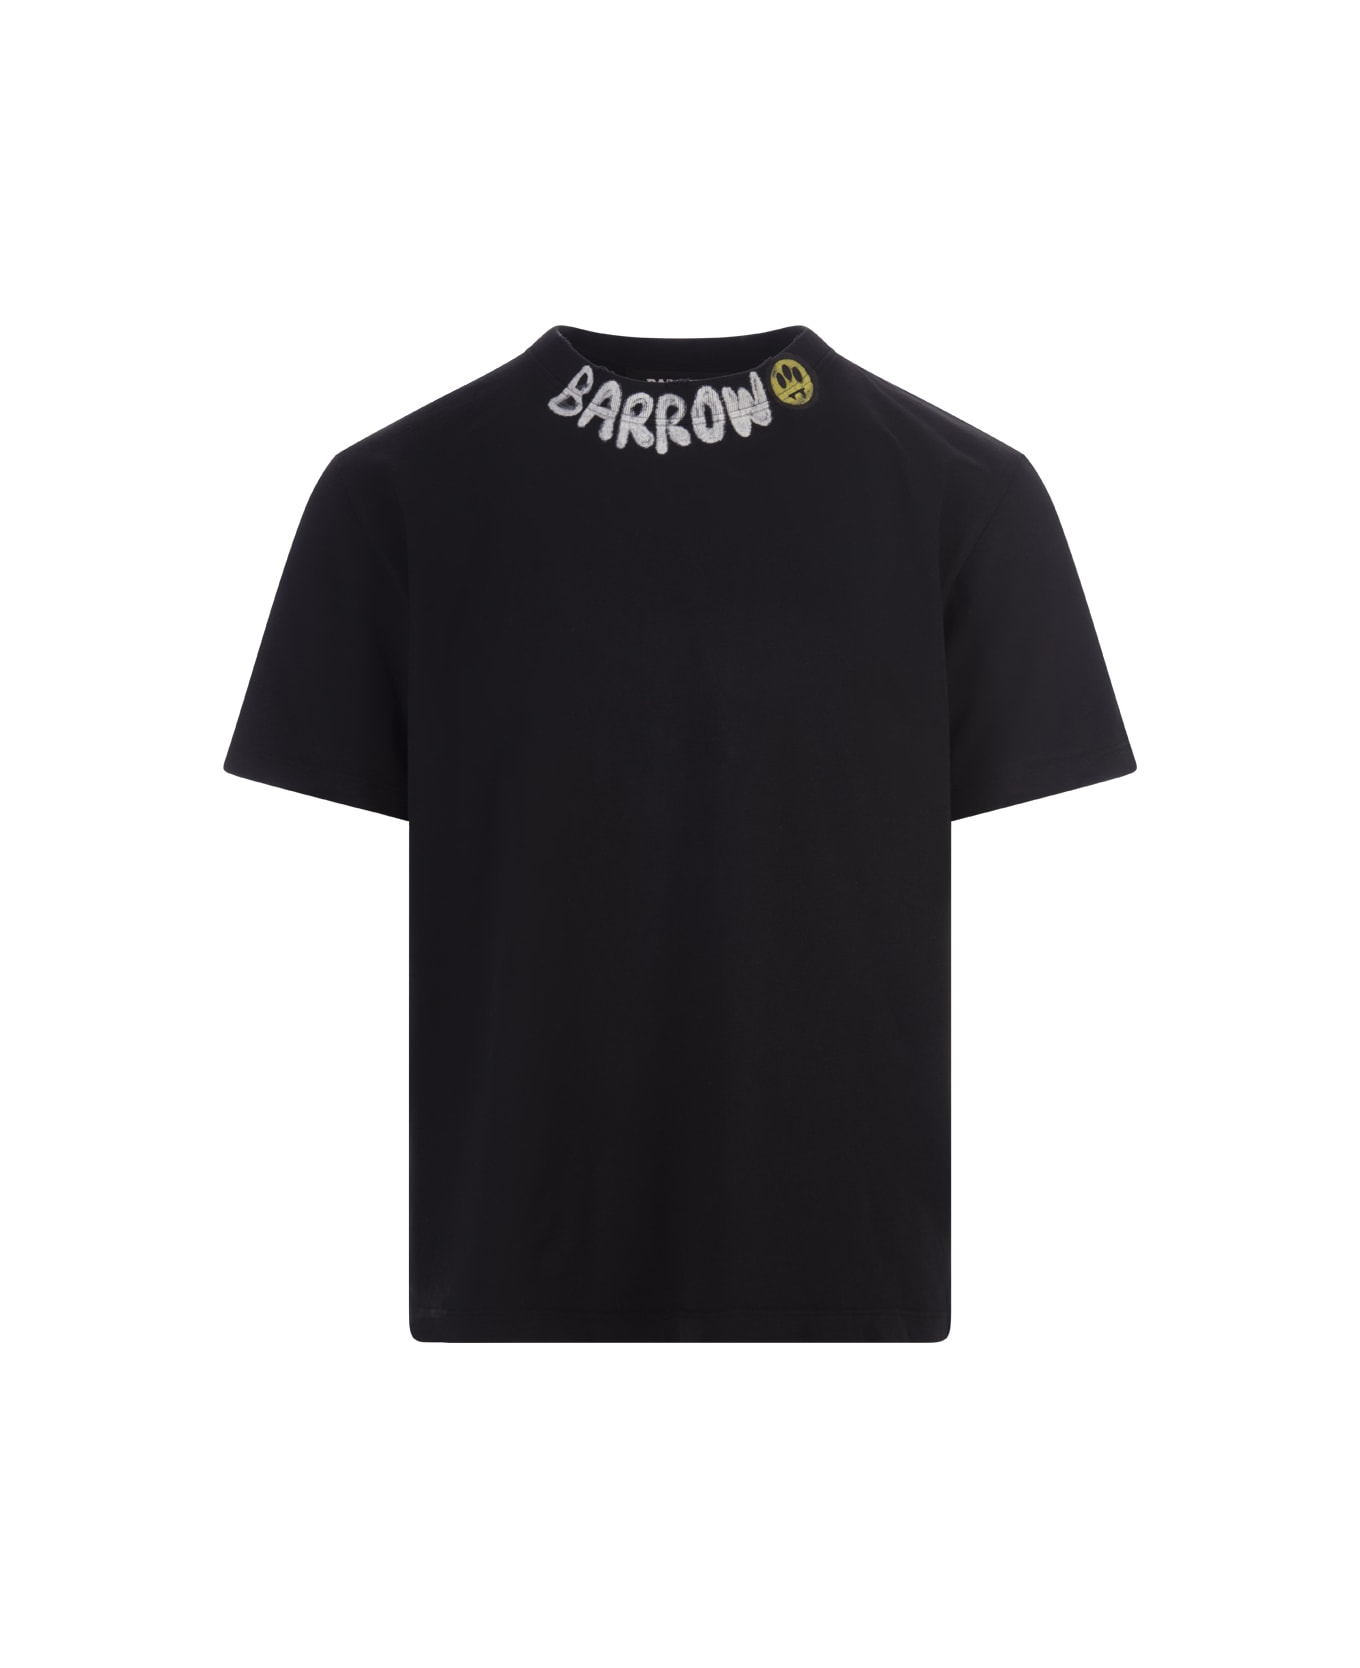 Barrow Black T-shirt With Logo On Neck - Black